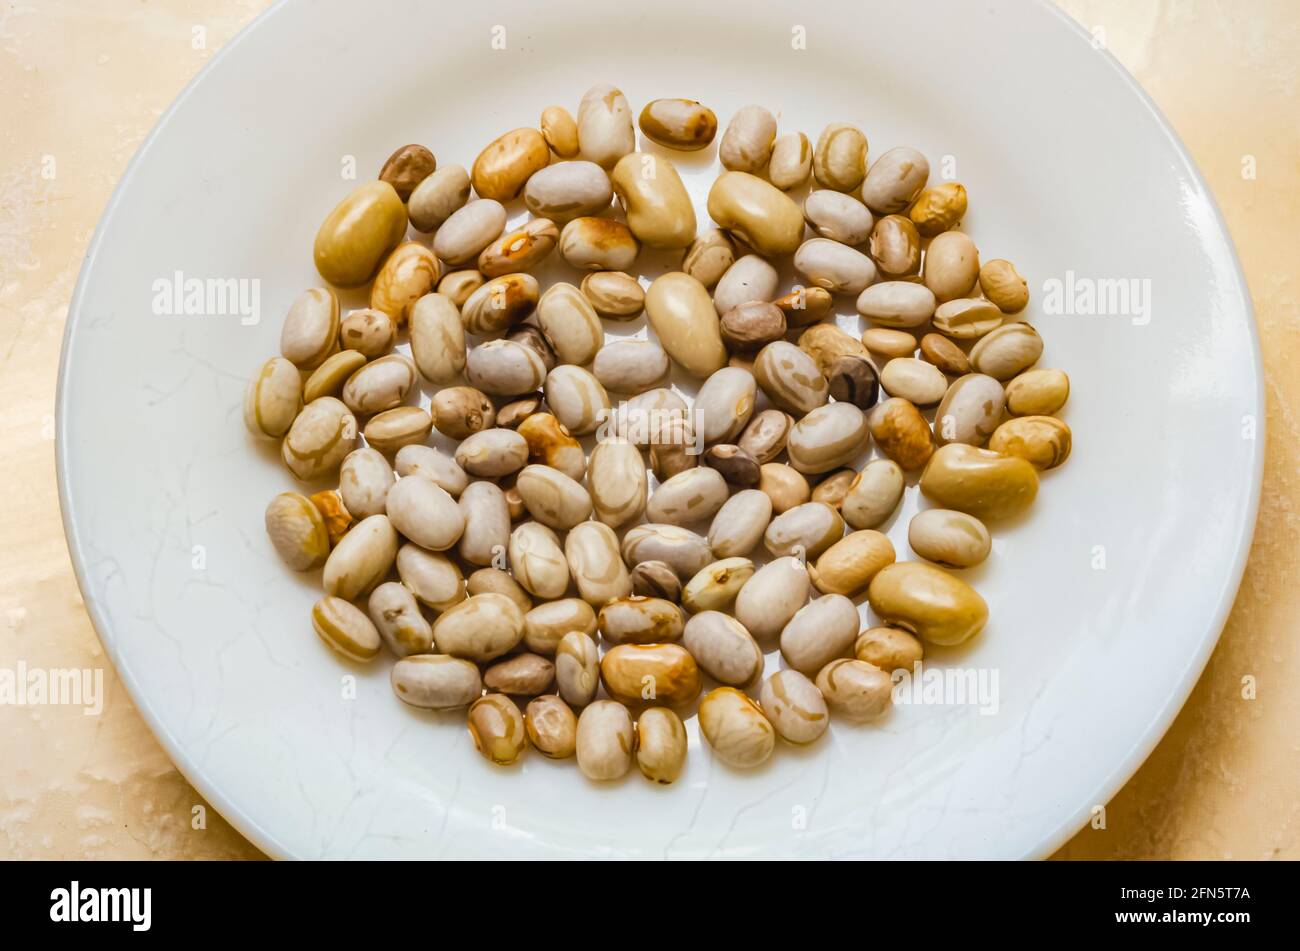 Pisum Sativum Peas (Split Peas) In Small White Plate. Stock Photo